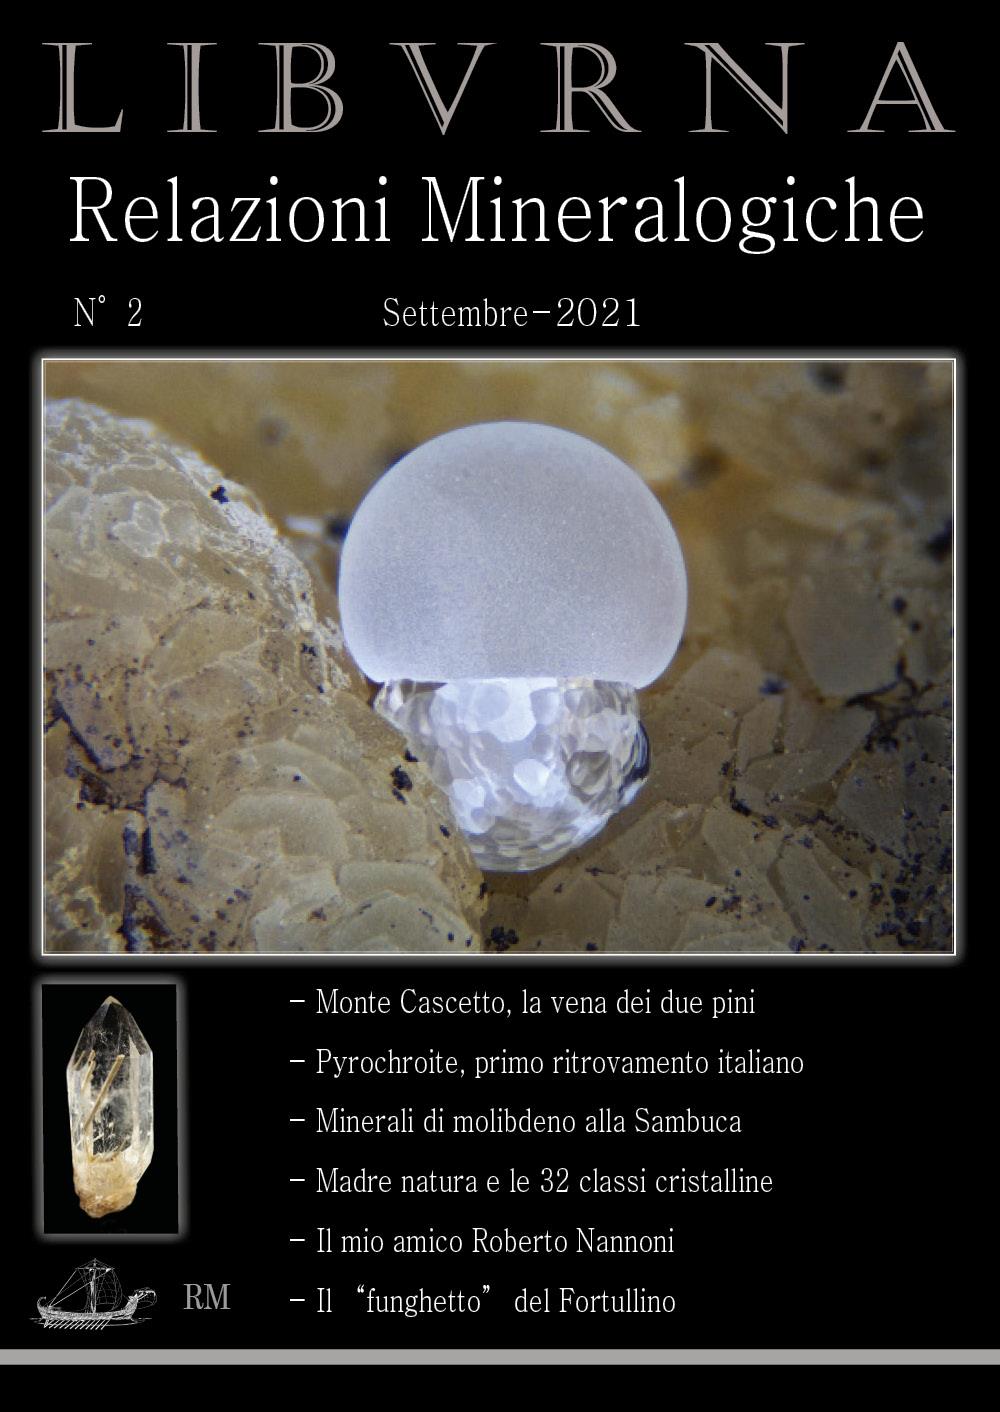 LIBVRNA N°2, minerali Toscana, settembre 2021. Mineralogia Toscana